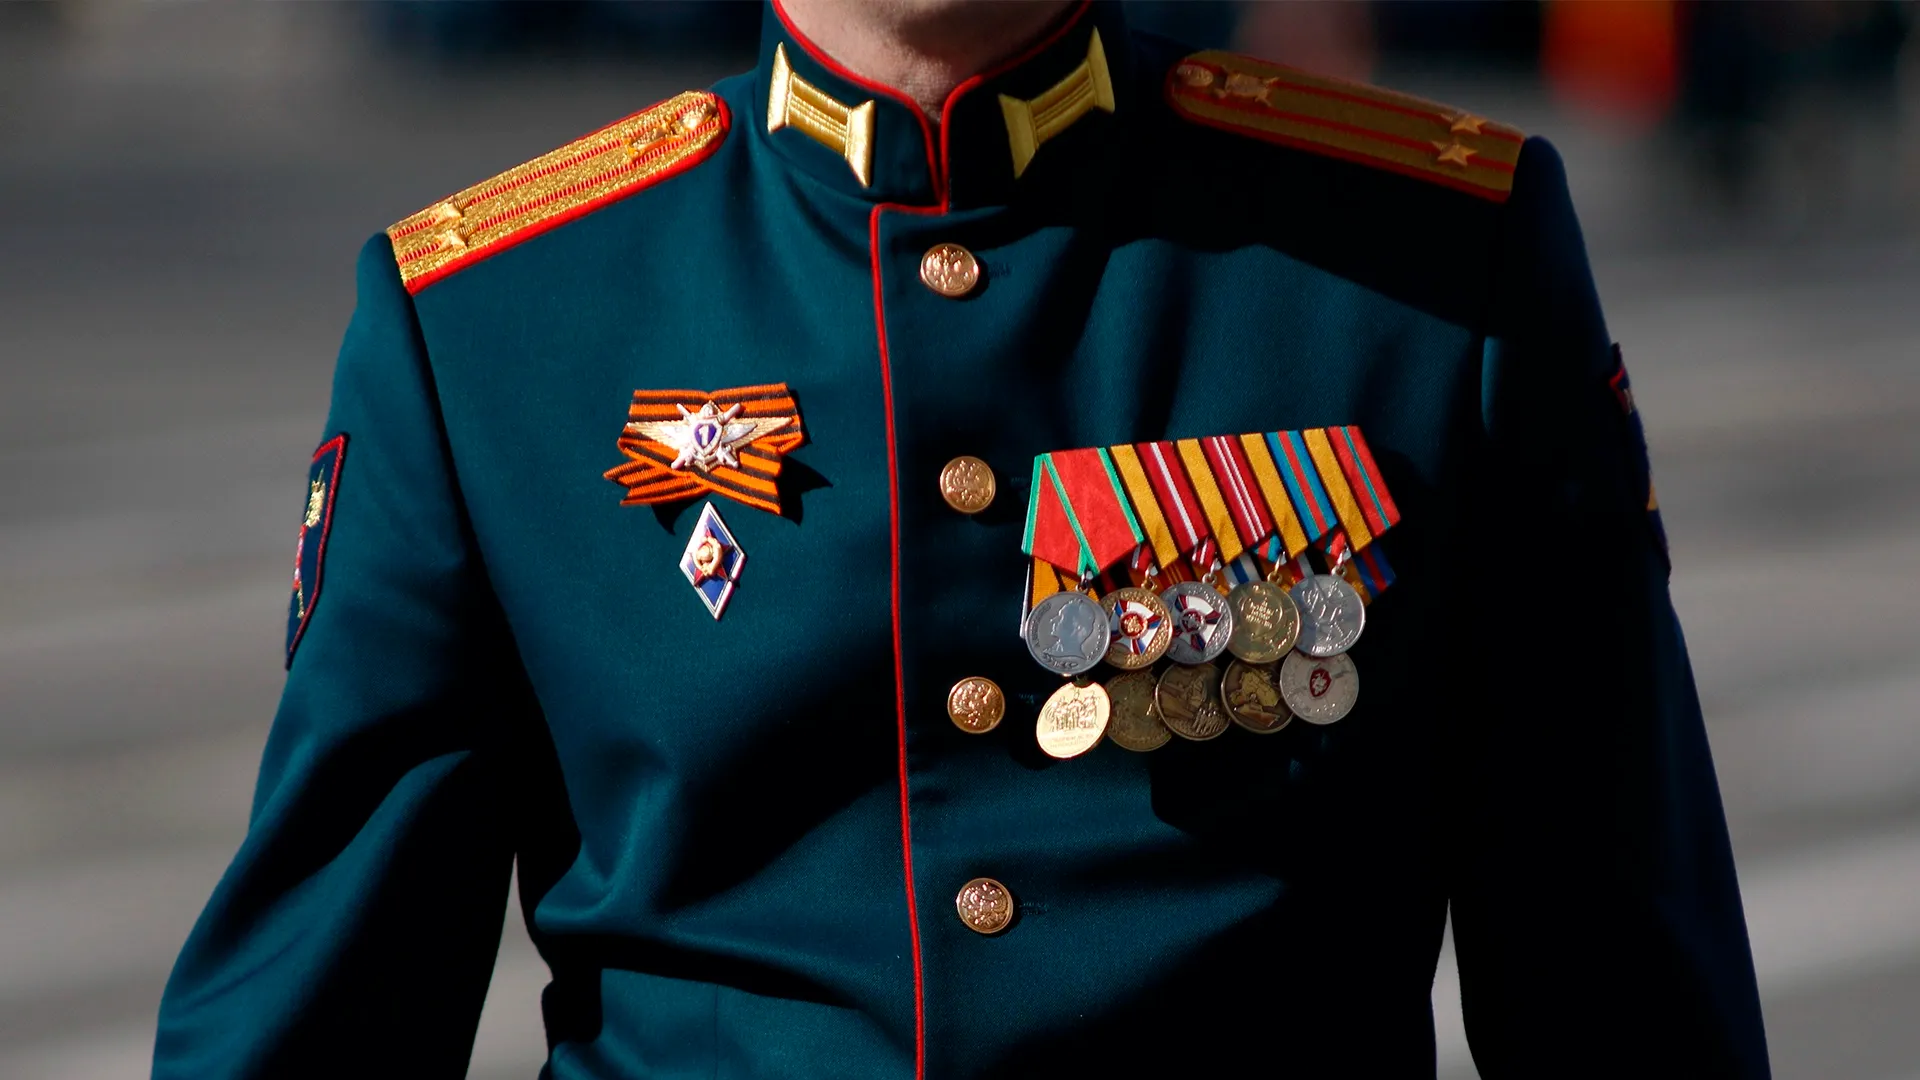 Государство предусмотрело значимую поддержку воинам СВО. Фото: Maksim Konstantinov /Shutterstock / Fotodom.